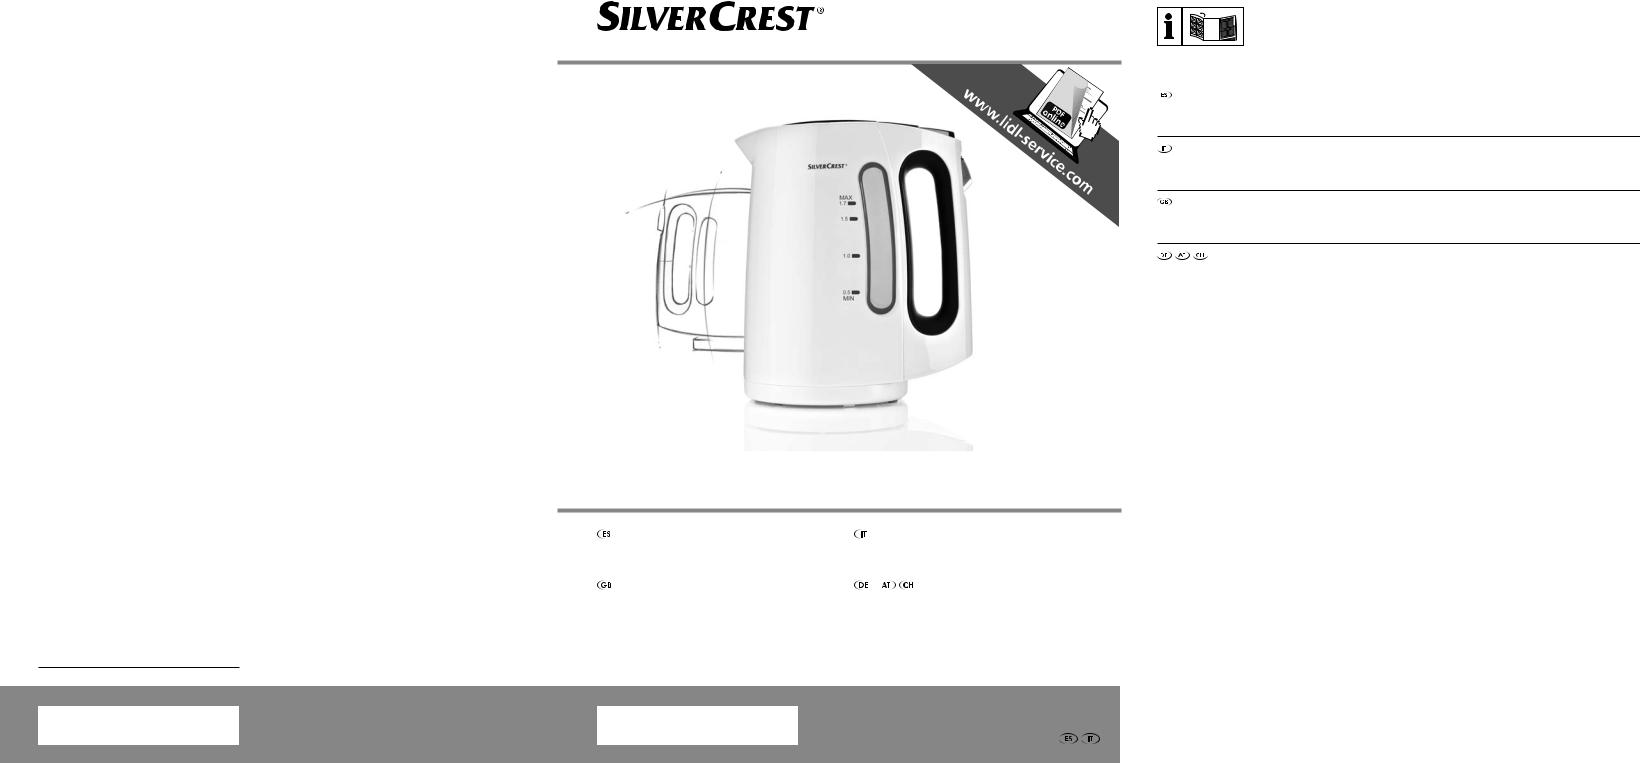 Silvercrest SWKCD 3000 A1 User Manual